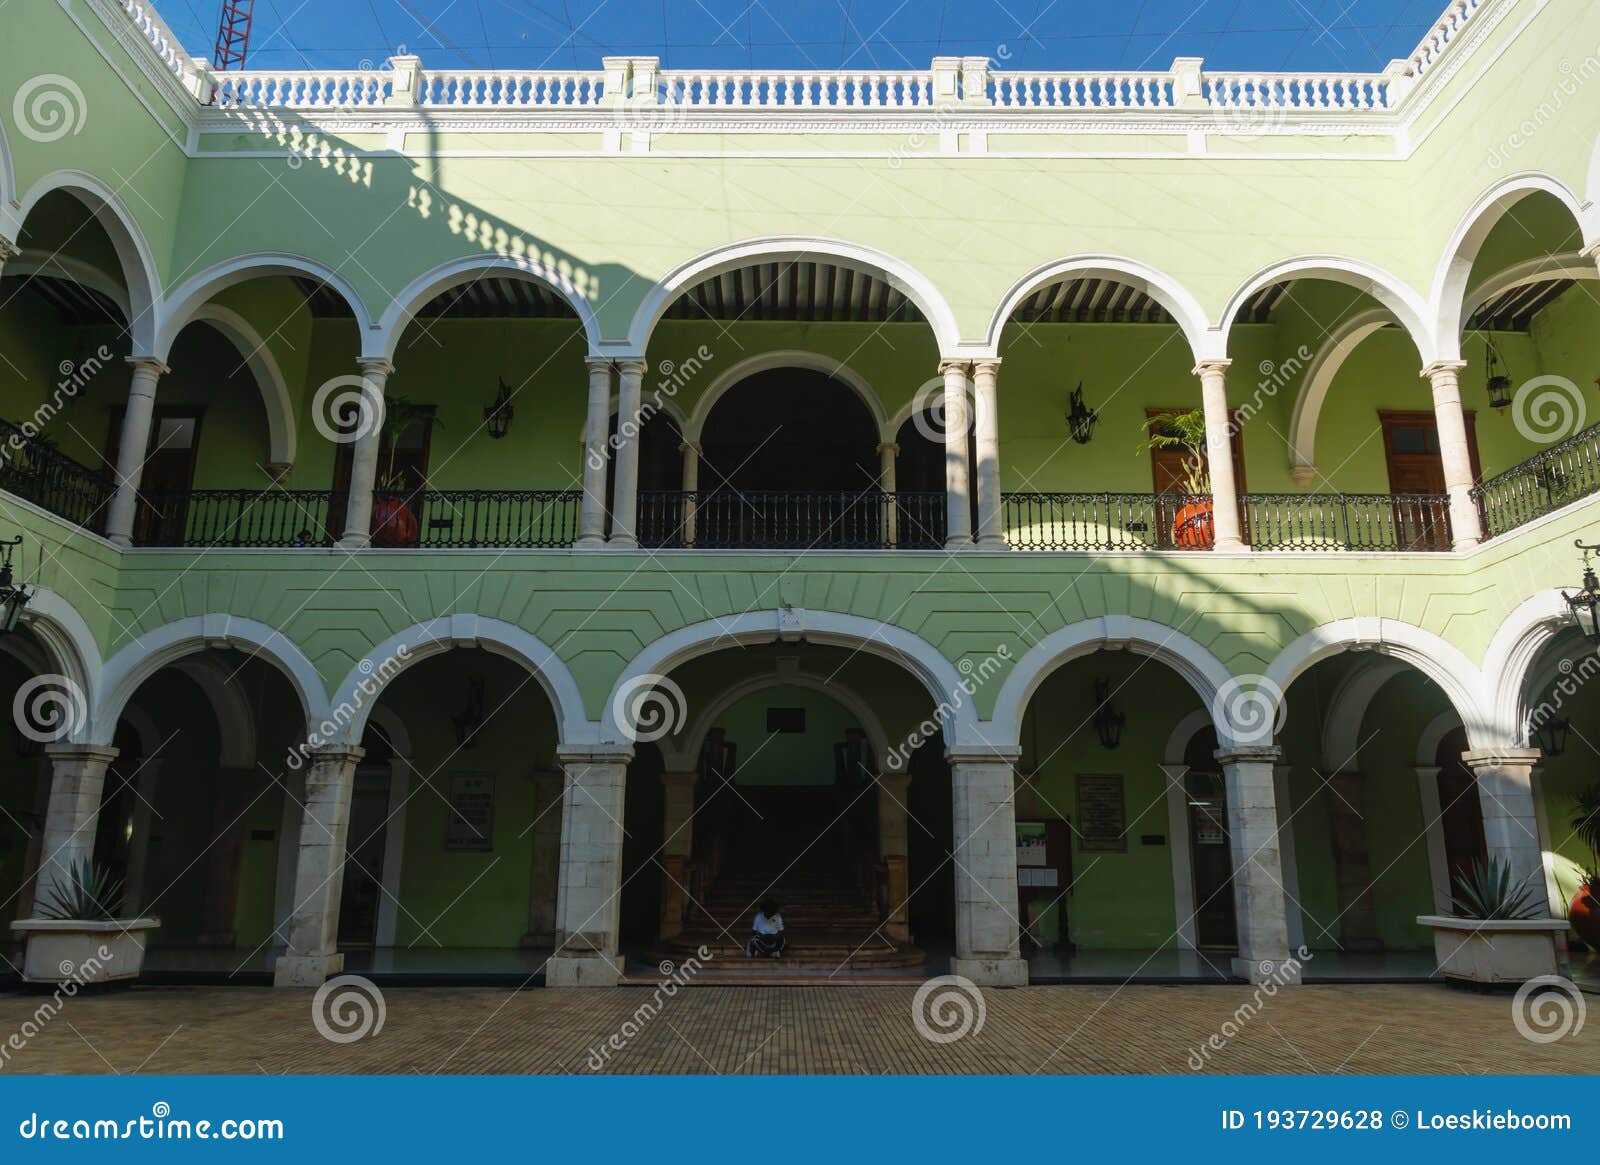 inner courtyard of `palacio de gobierno`, the government palace in merida, mexico